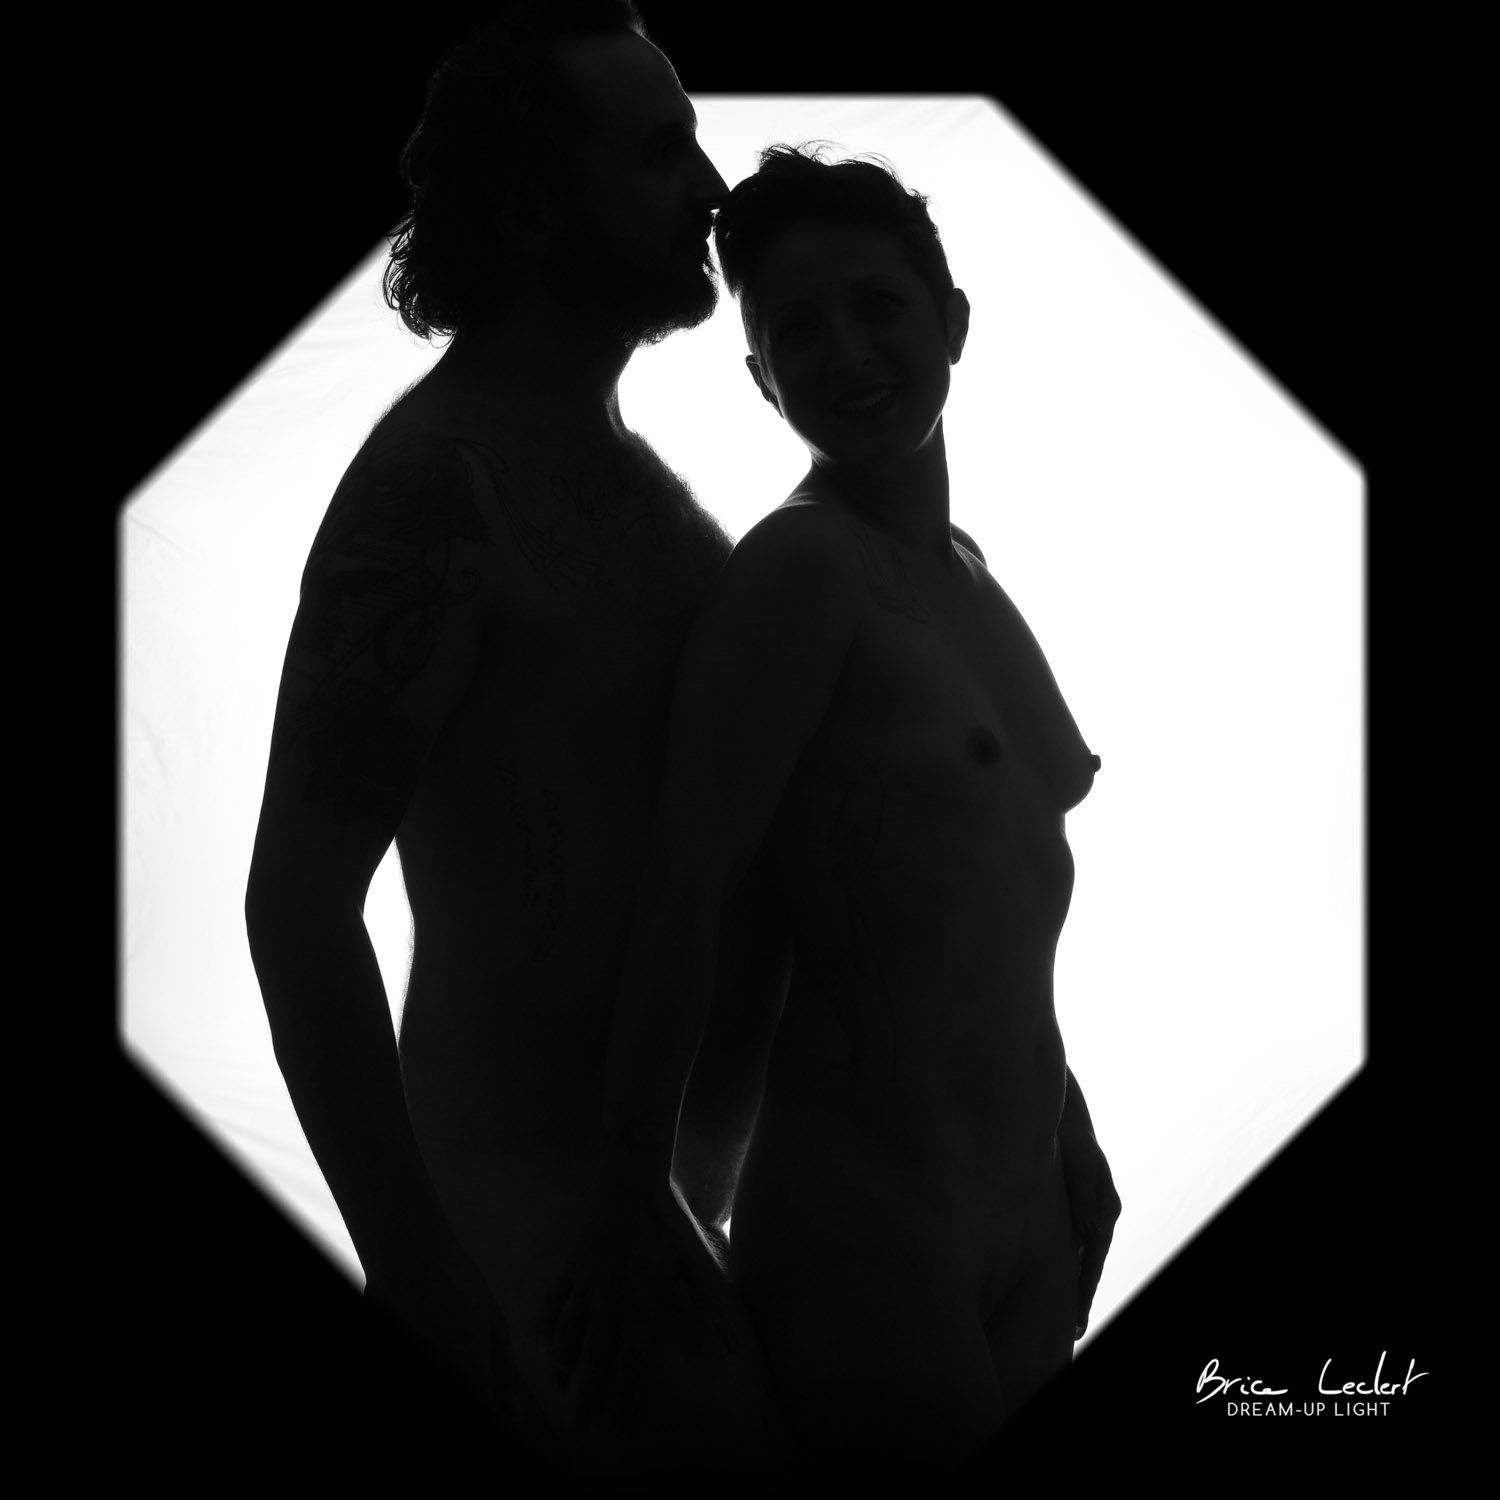 photographe studio nu artistique couple silhouette lyon